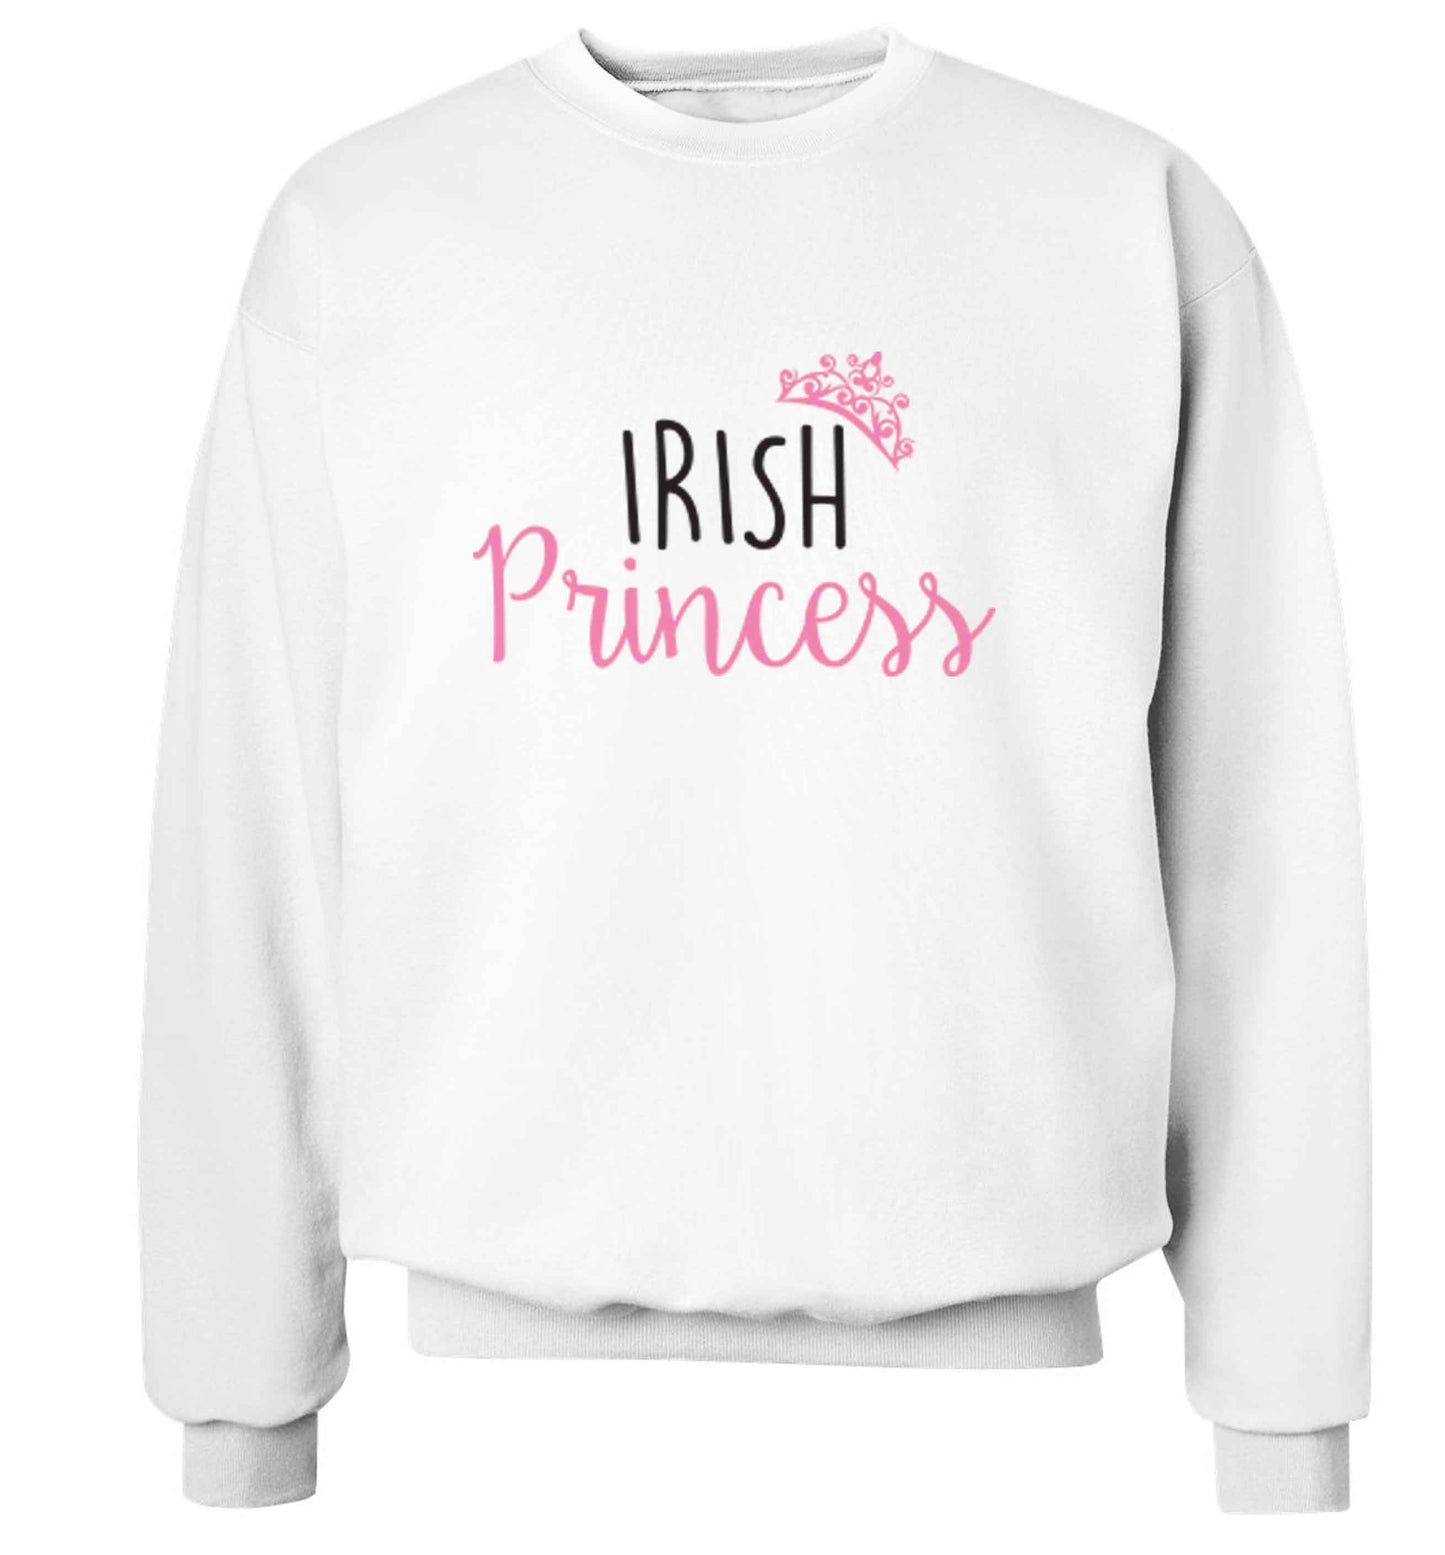 Irish princess adult's unisex white sweater 2XL